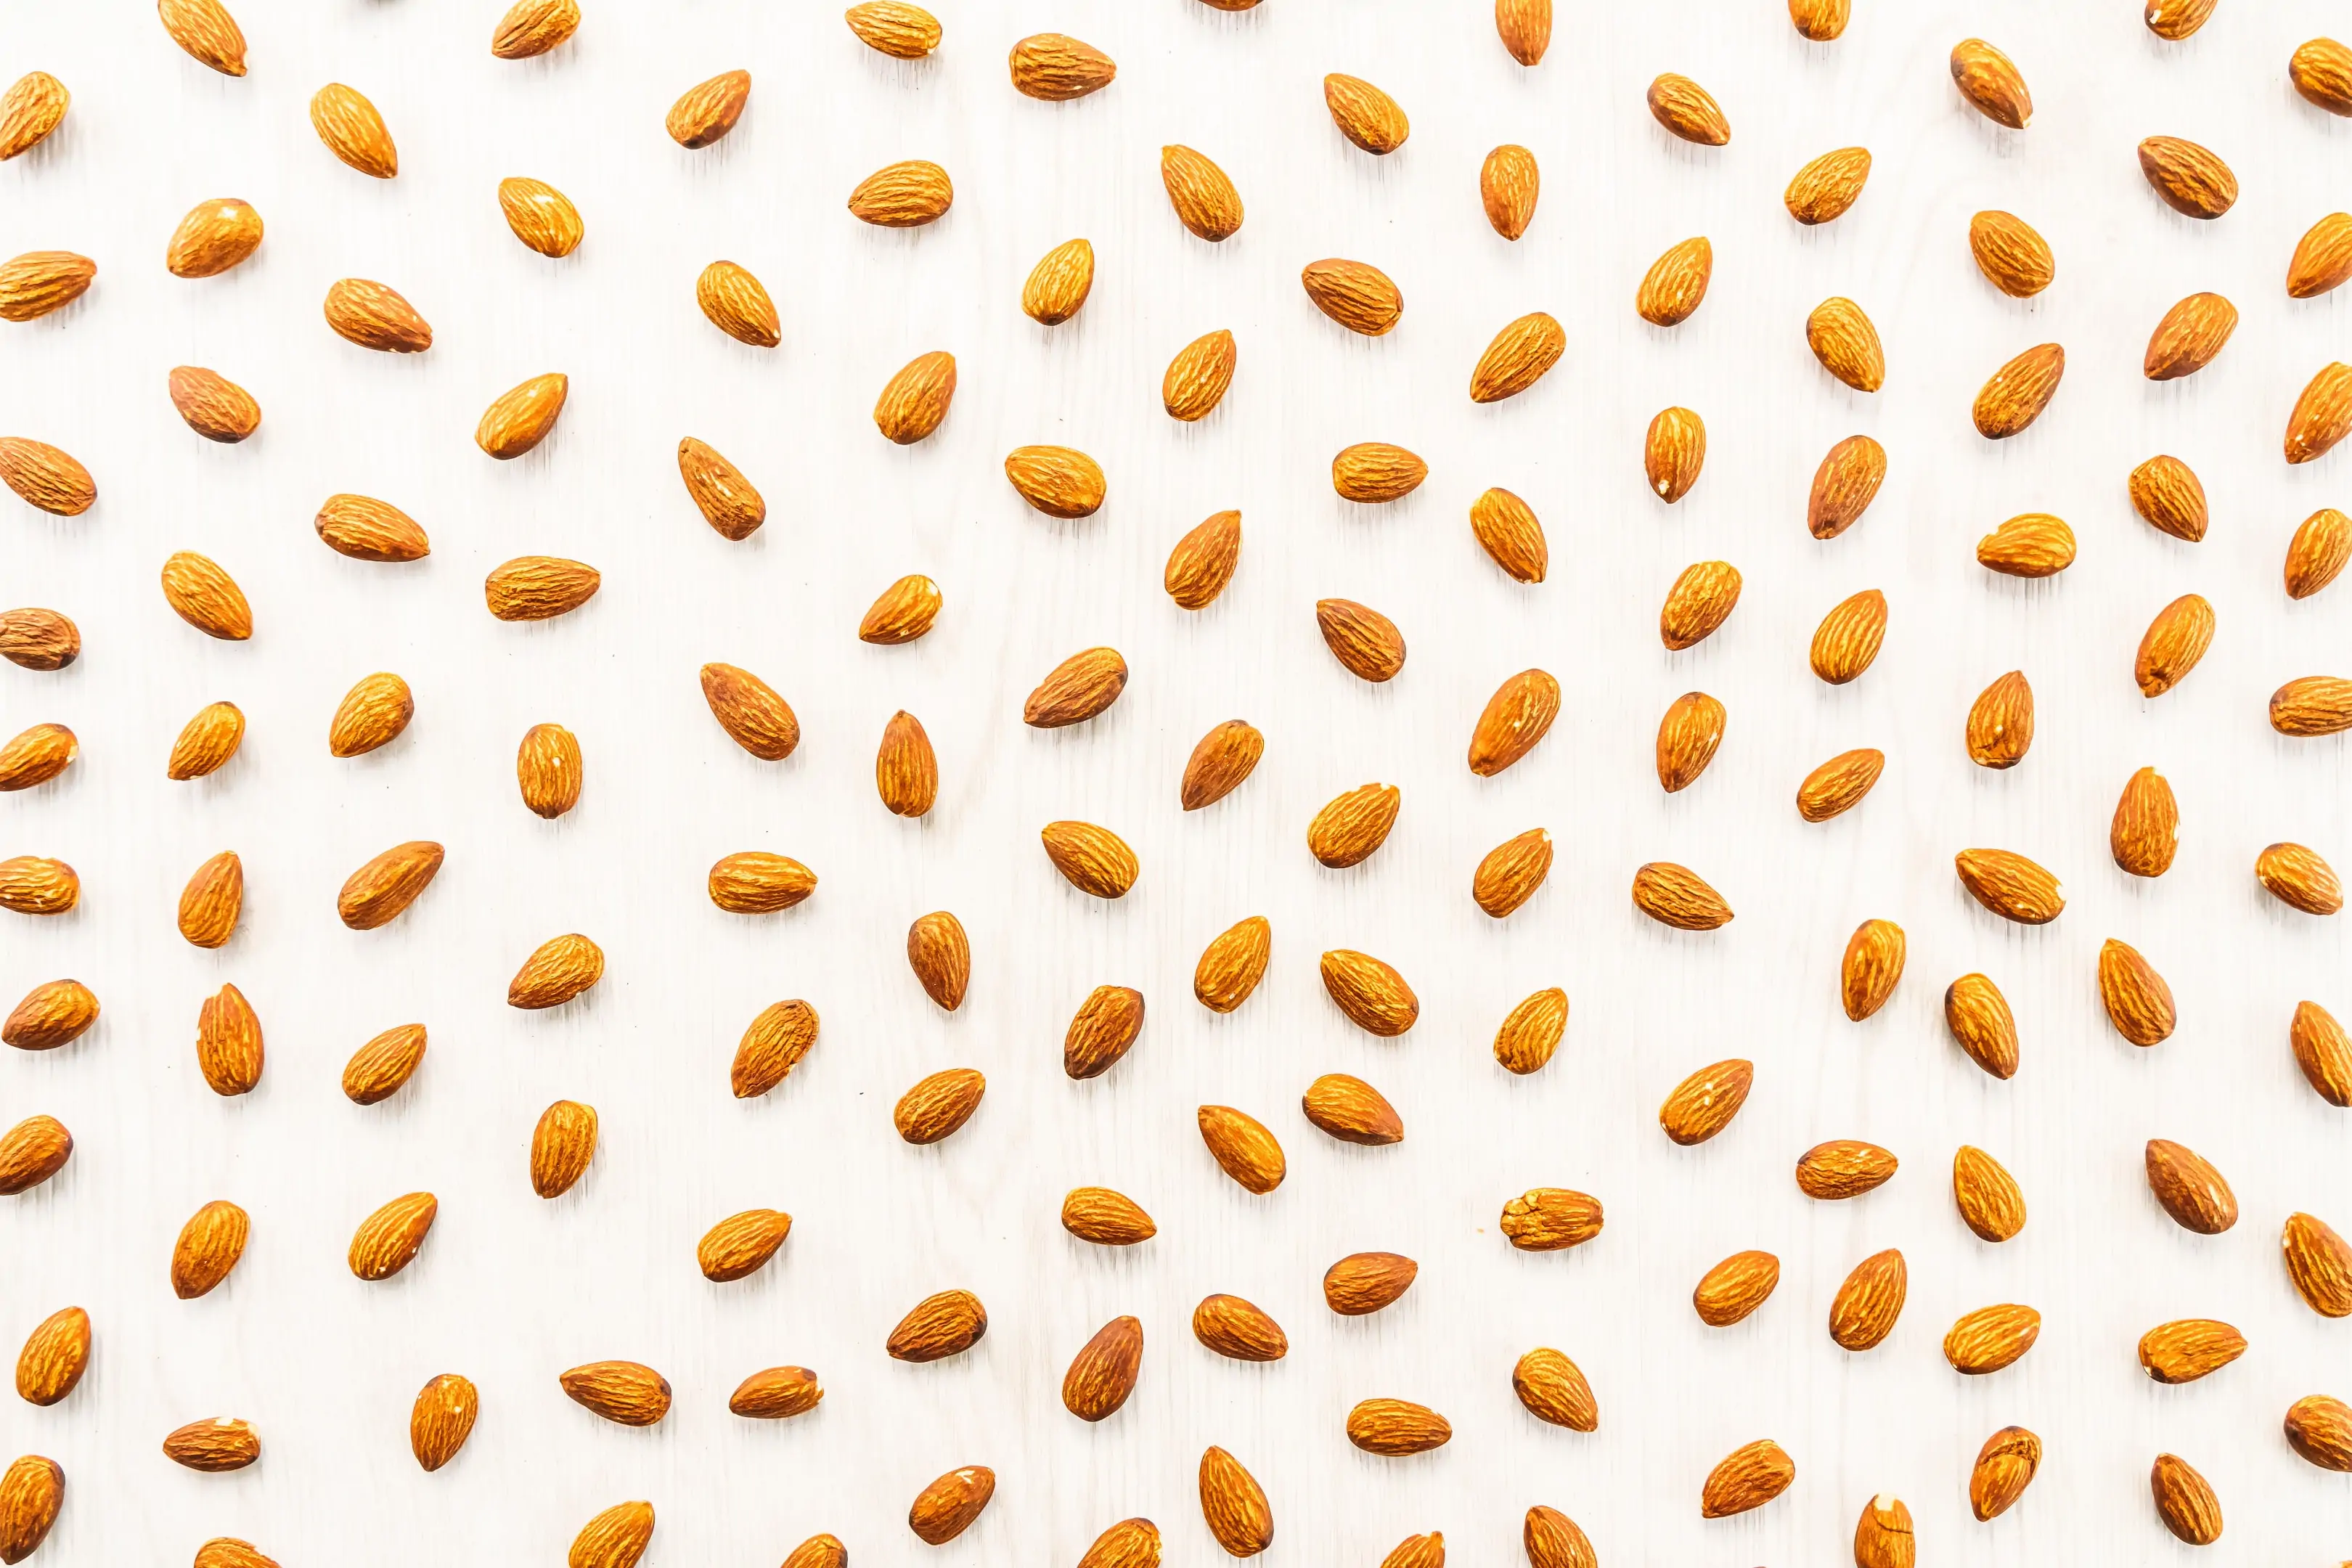 Almonds pattern